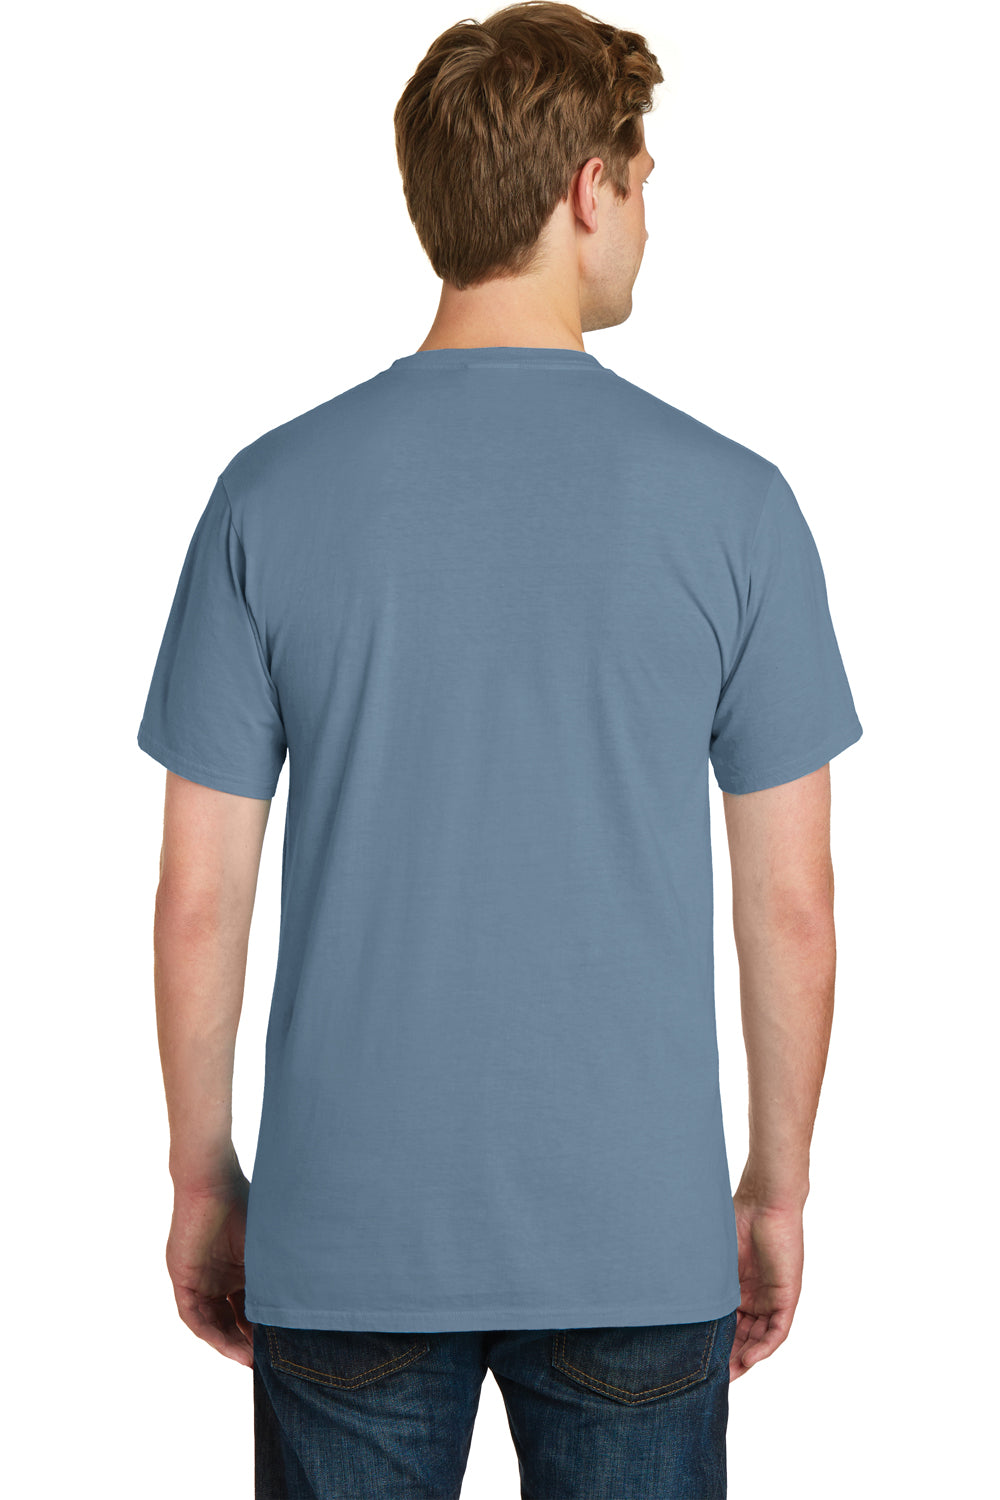 Port & Company PC099P Mens Beach Wash Short Sleeve Crewneck T-Shirt w/ Pocket Denim Blue Back